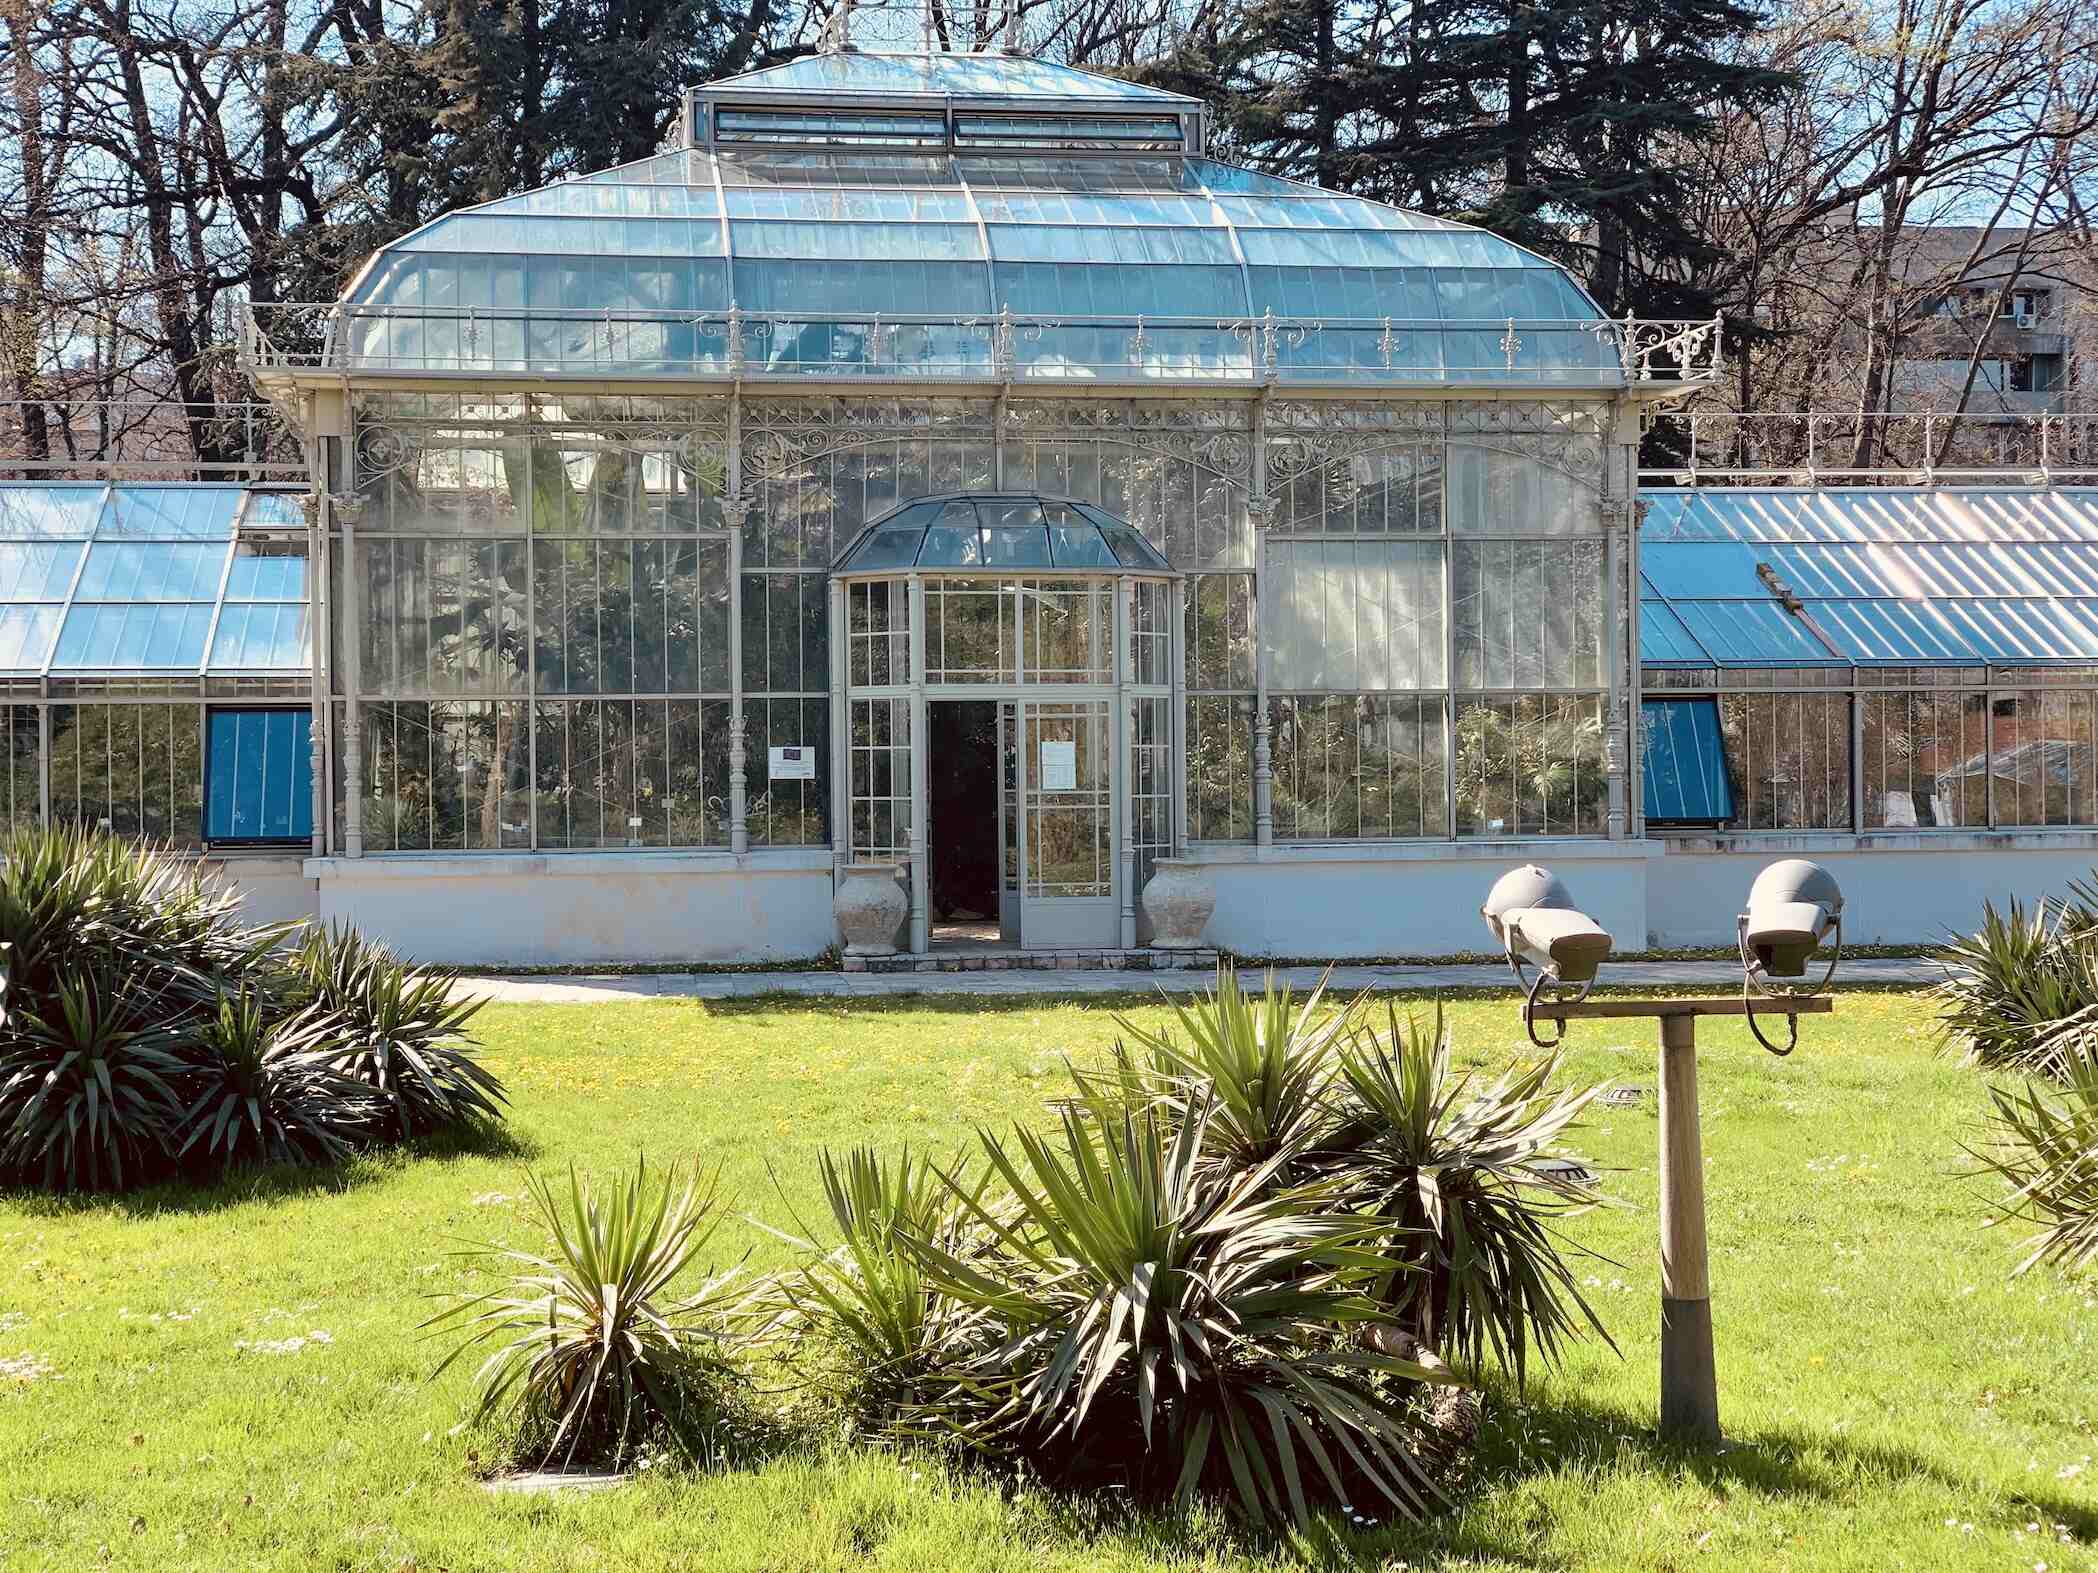 The greenhouse at Jevremovac Botanical Garden